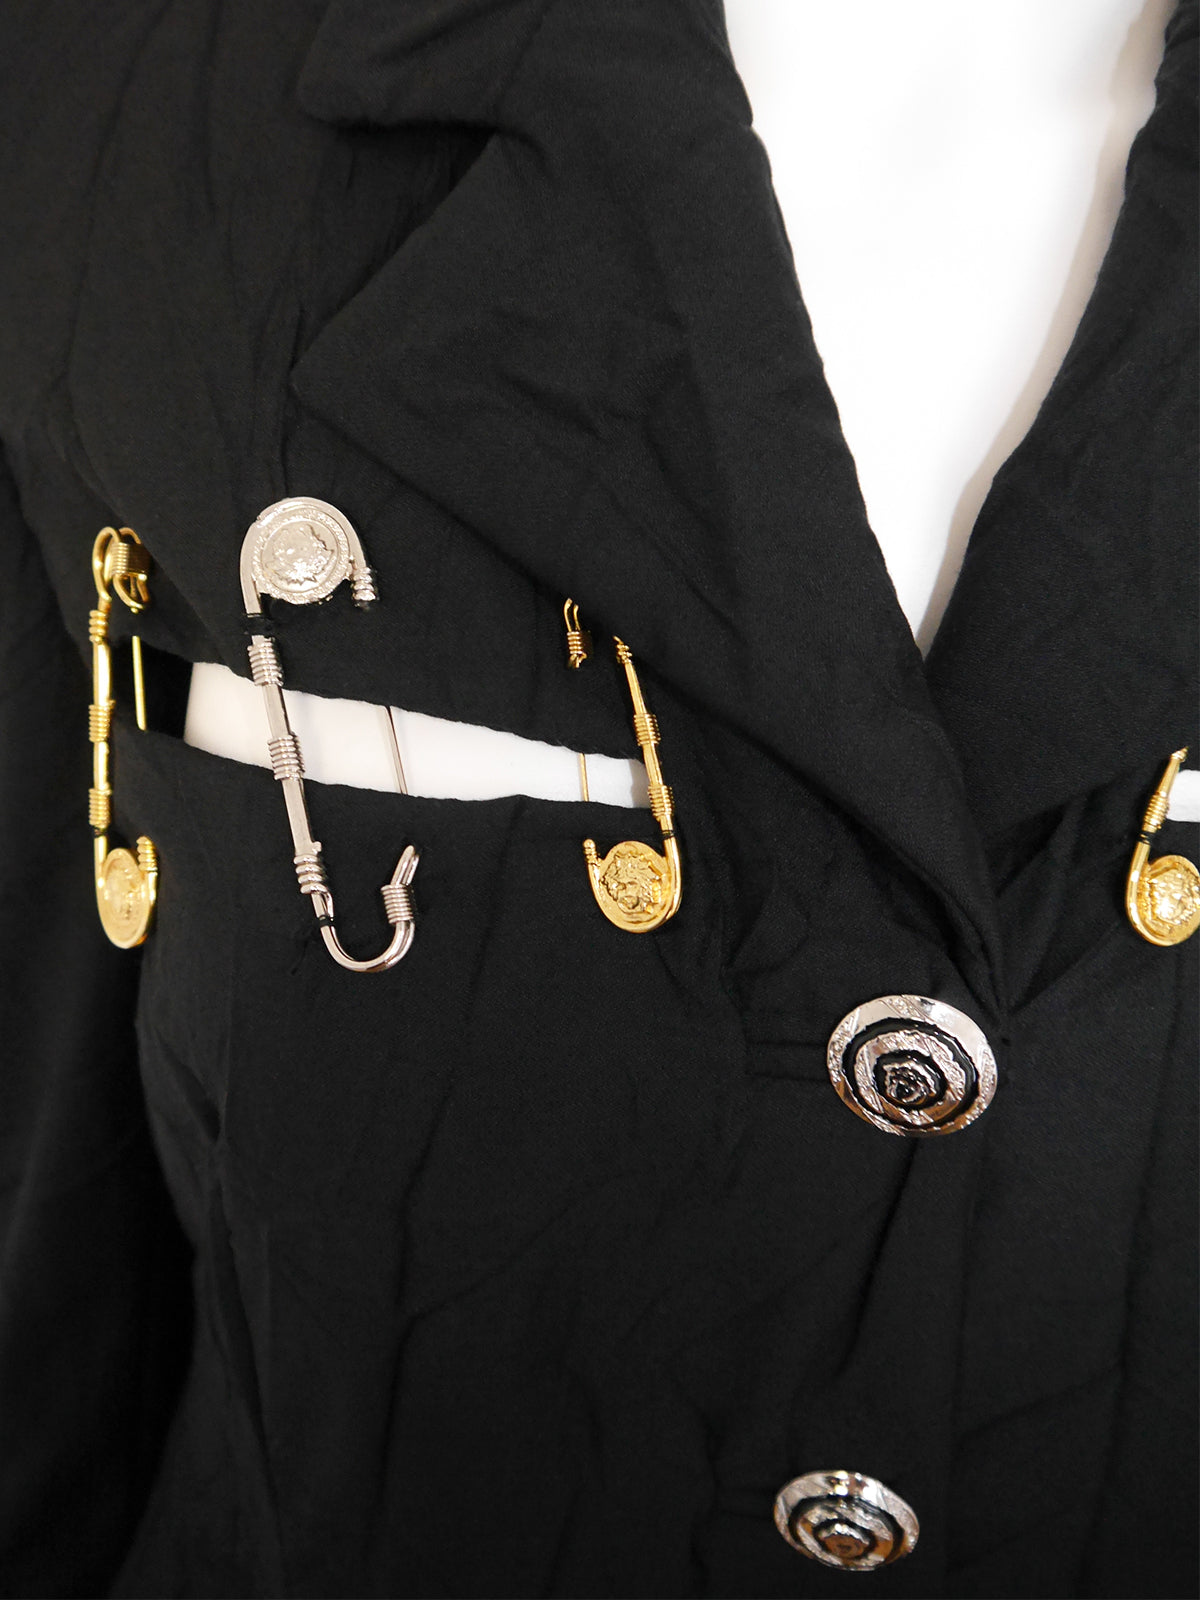 GIANNI VERSACE Couture Spring 1994 Vintage Black Crinkled Safety Pin Jacket